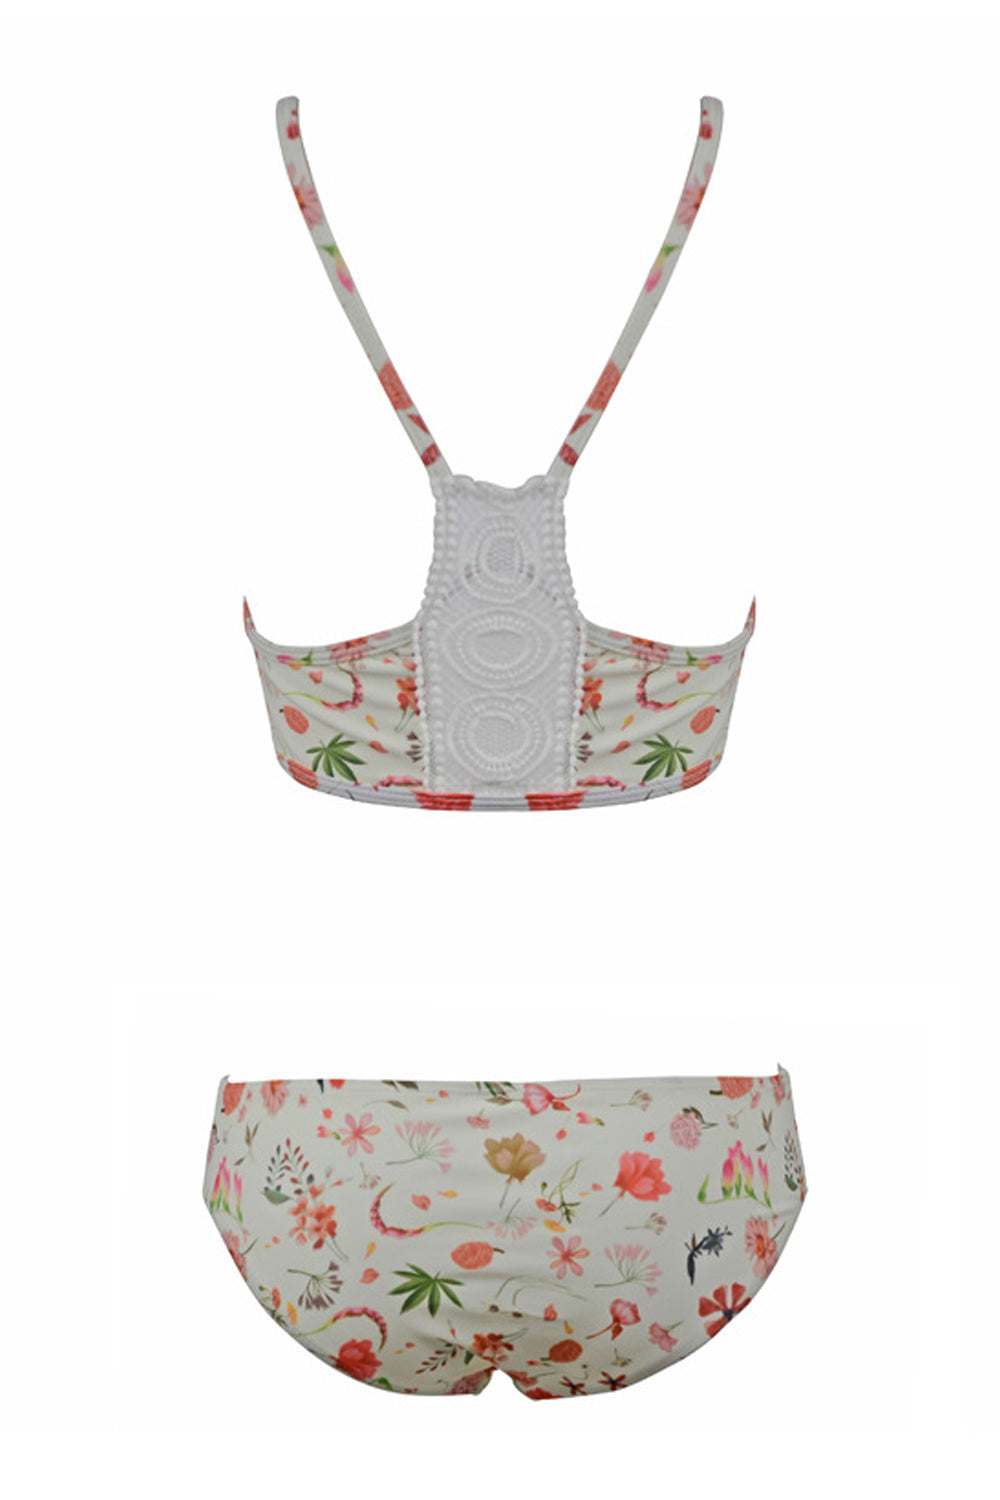 Iyasson Sweet Floral Printing Cut Out Design Bikini Sets